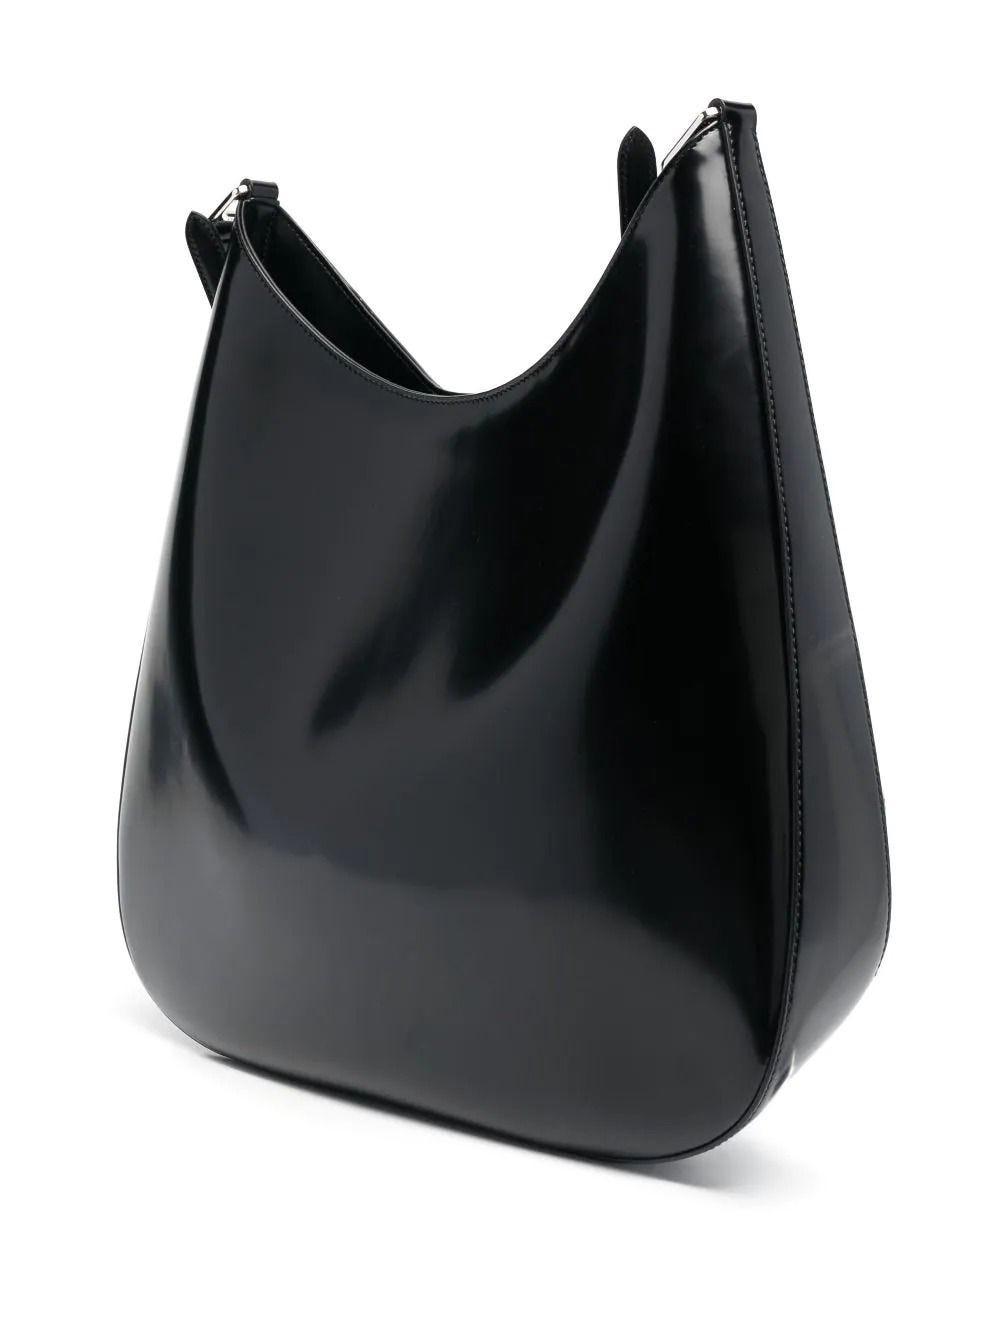 Cleo Small Leather Shoulder Bag in Black - Prada